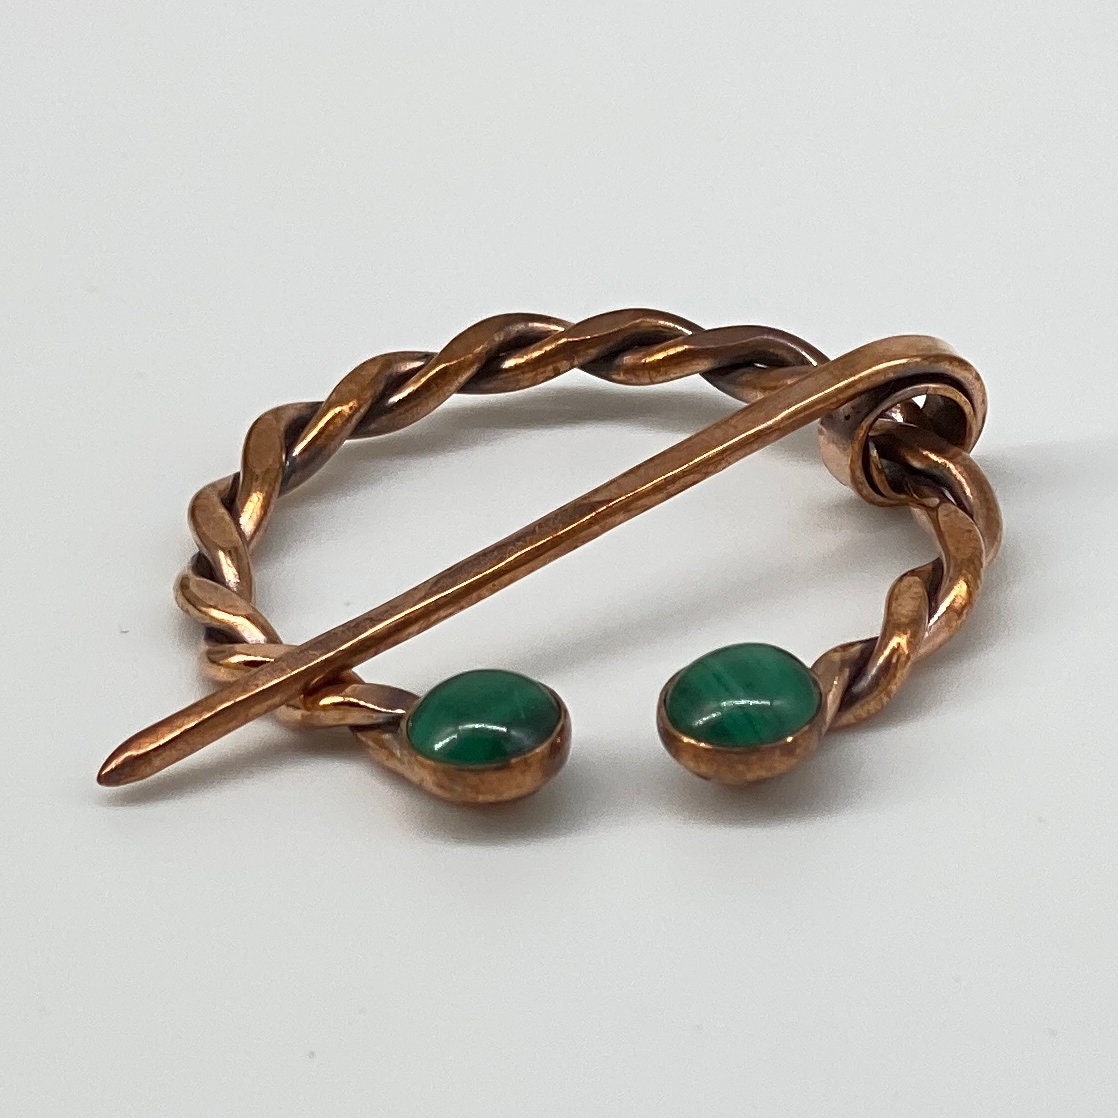 Celtic Copper Brooch, Viking Brooch, Copper Cloak Pin, Medieval